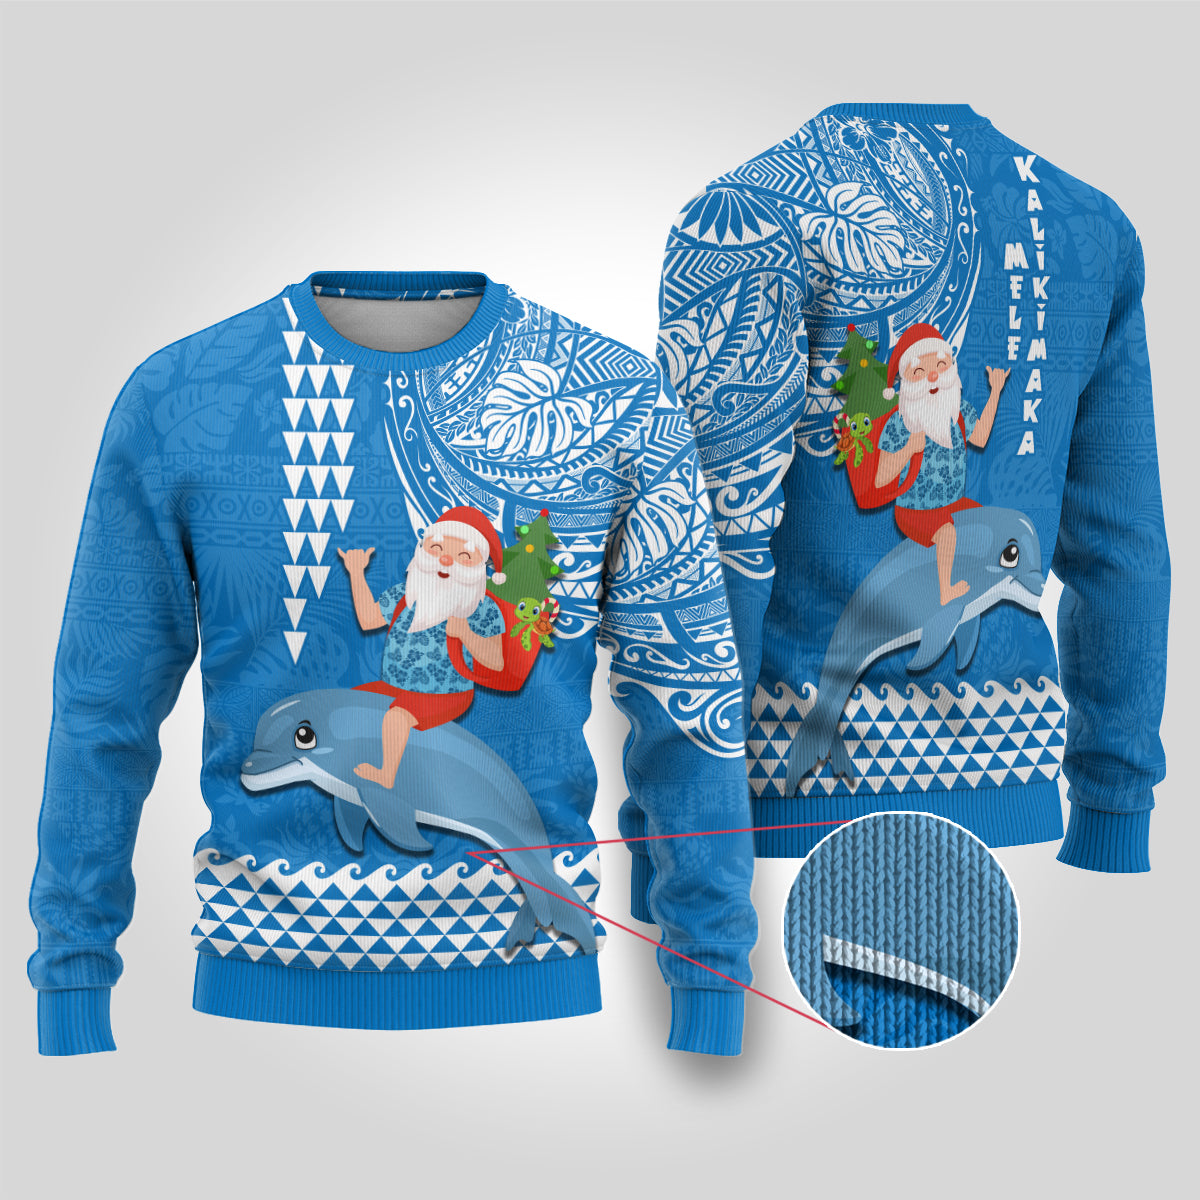 Hawaii Mele Kalikimaka Ugly Christmas Sweater Santa Riding The DolPhin Mix Kakau Pattern Blue Style LT03 Blue - Polynesian Pride